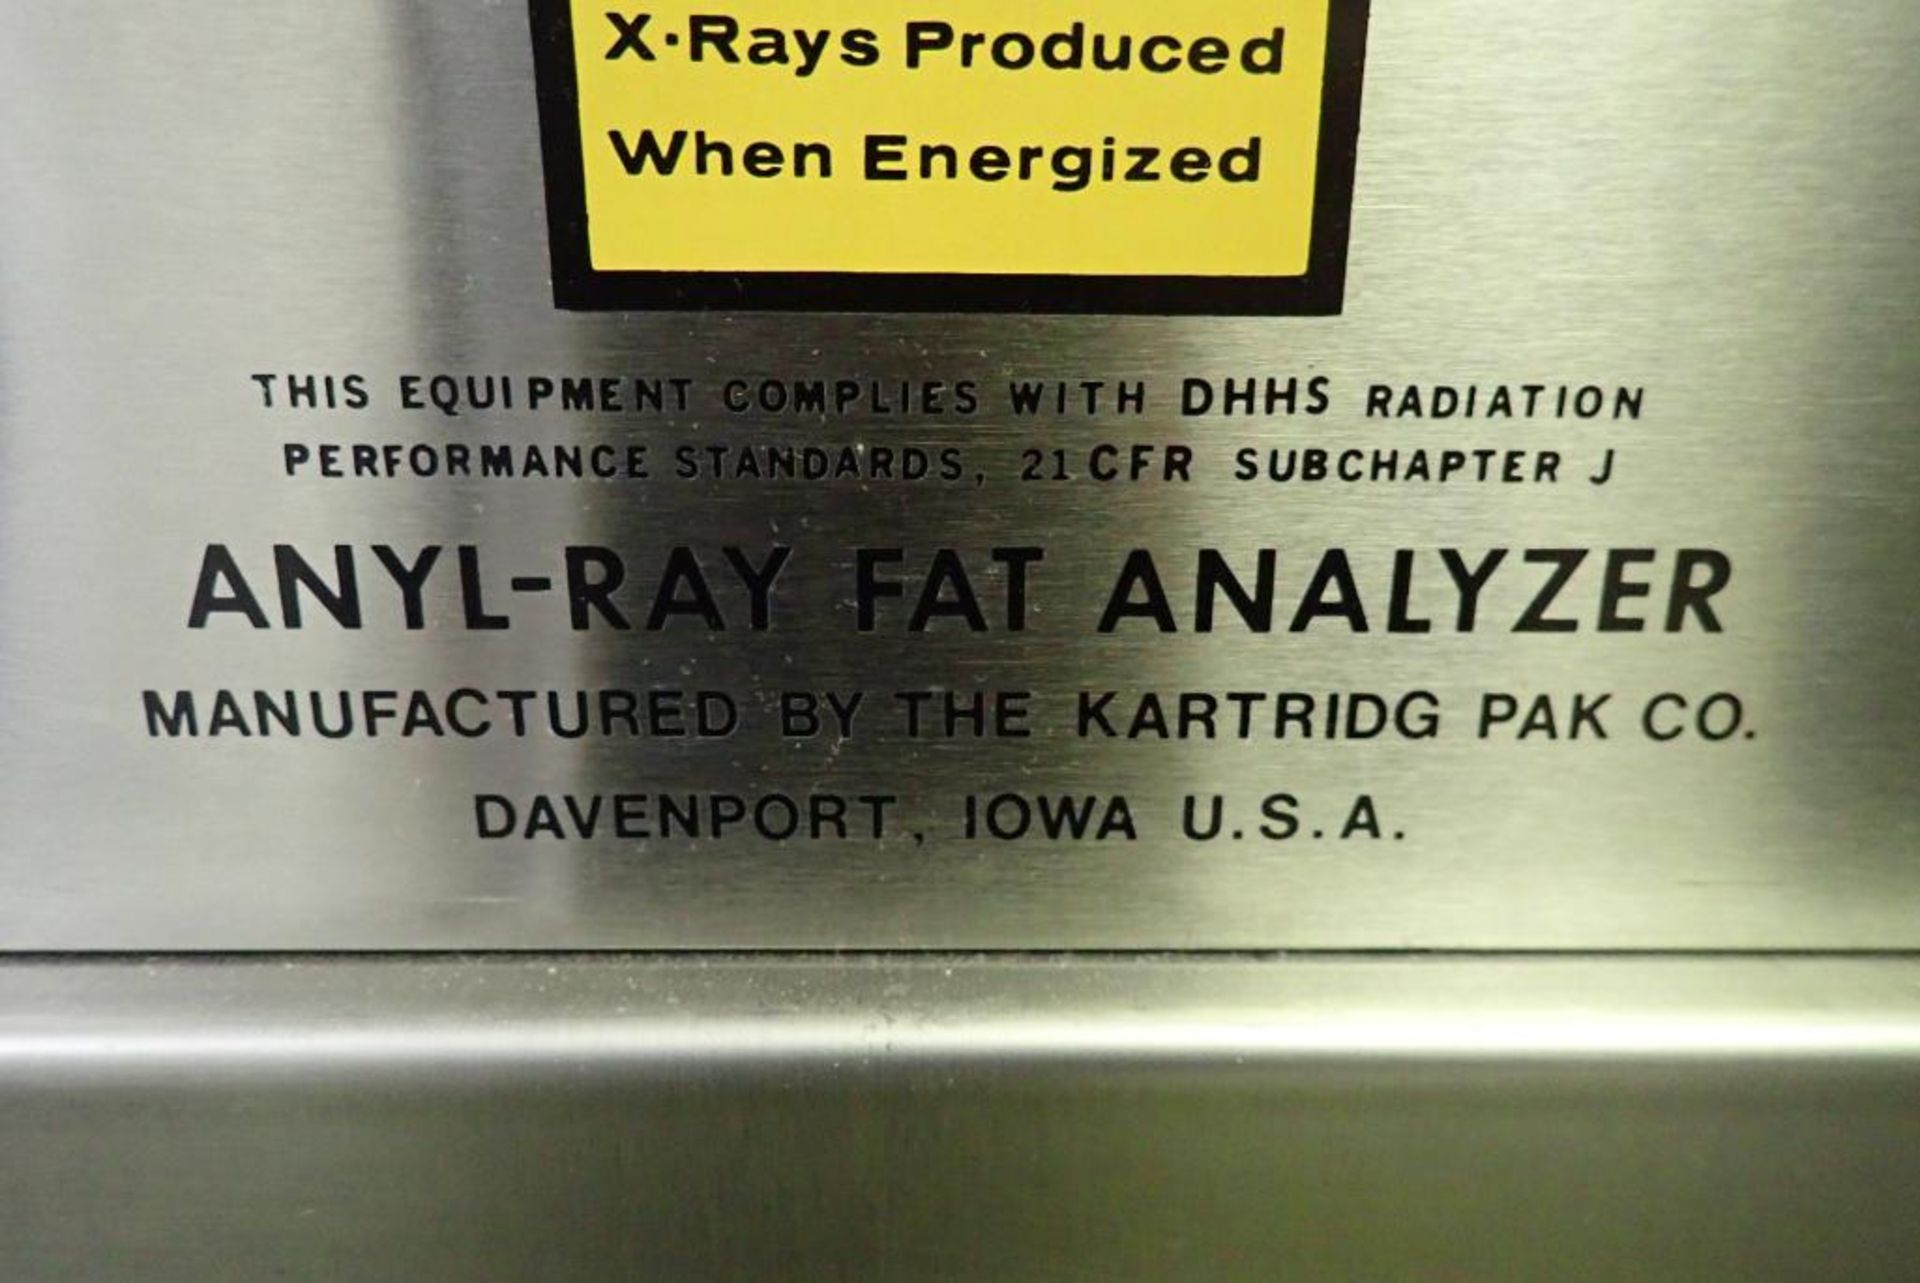 Anyl-Ray fat analyzer - Image 3 of 10